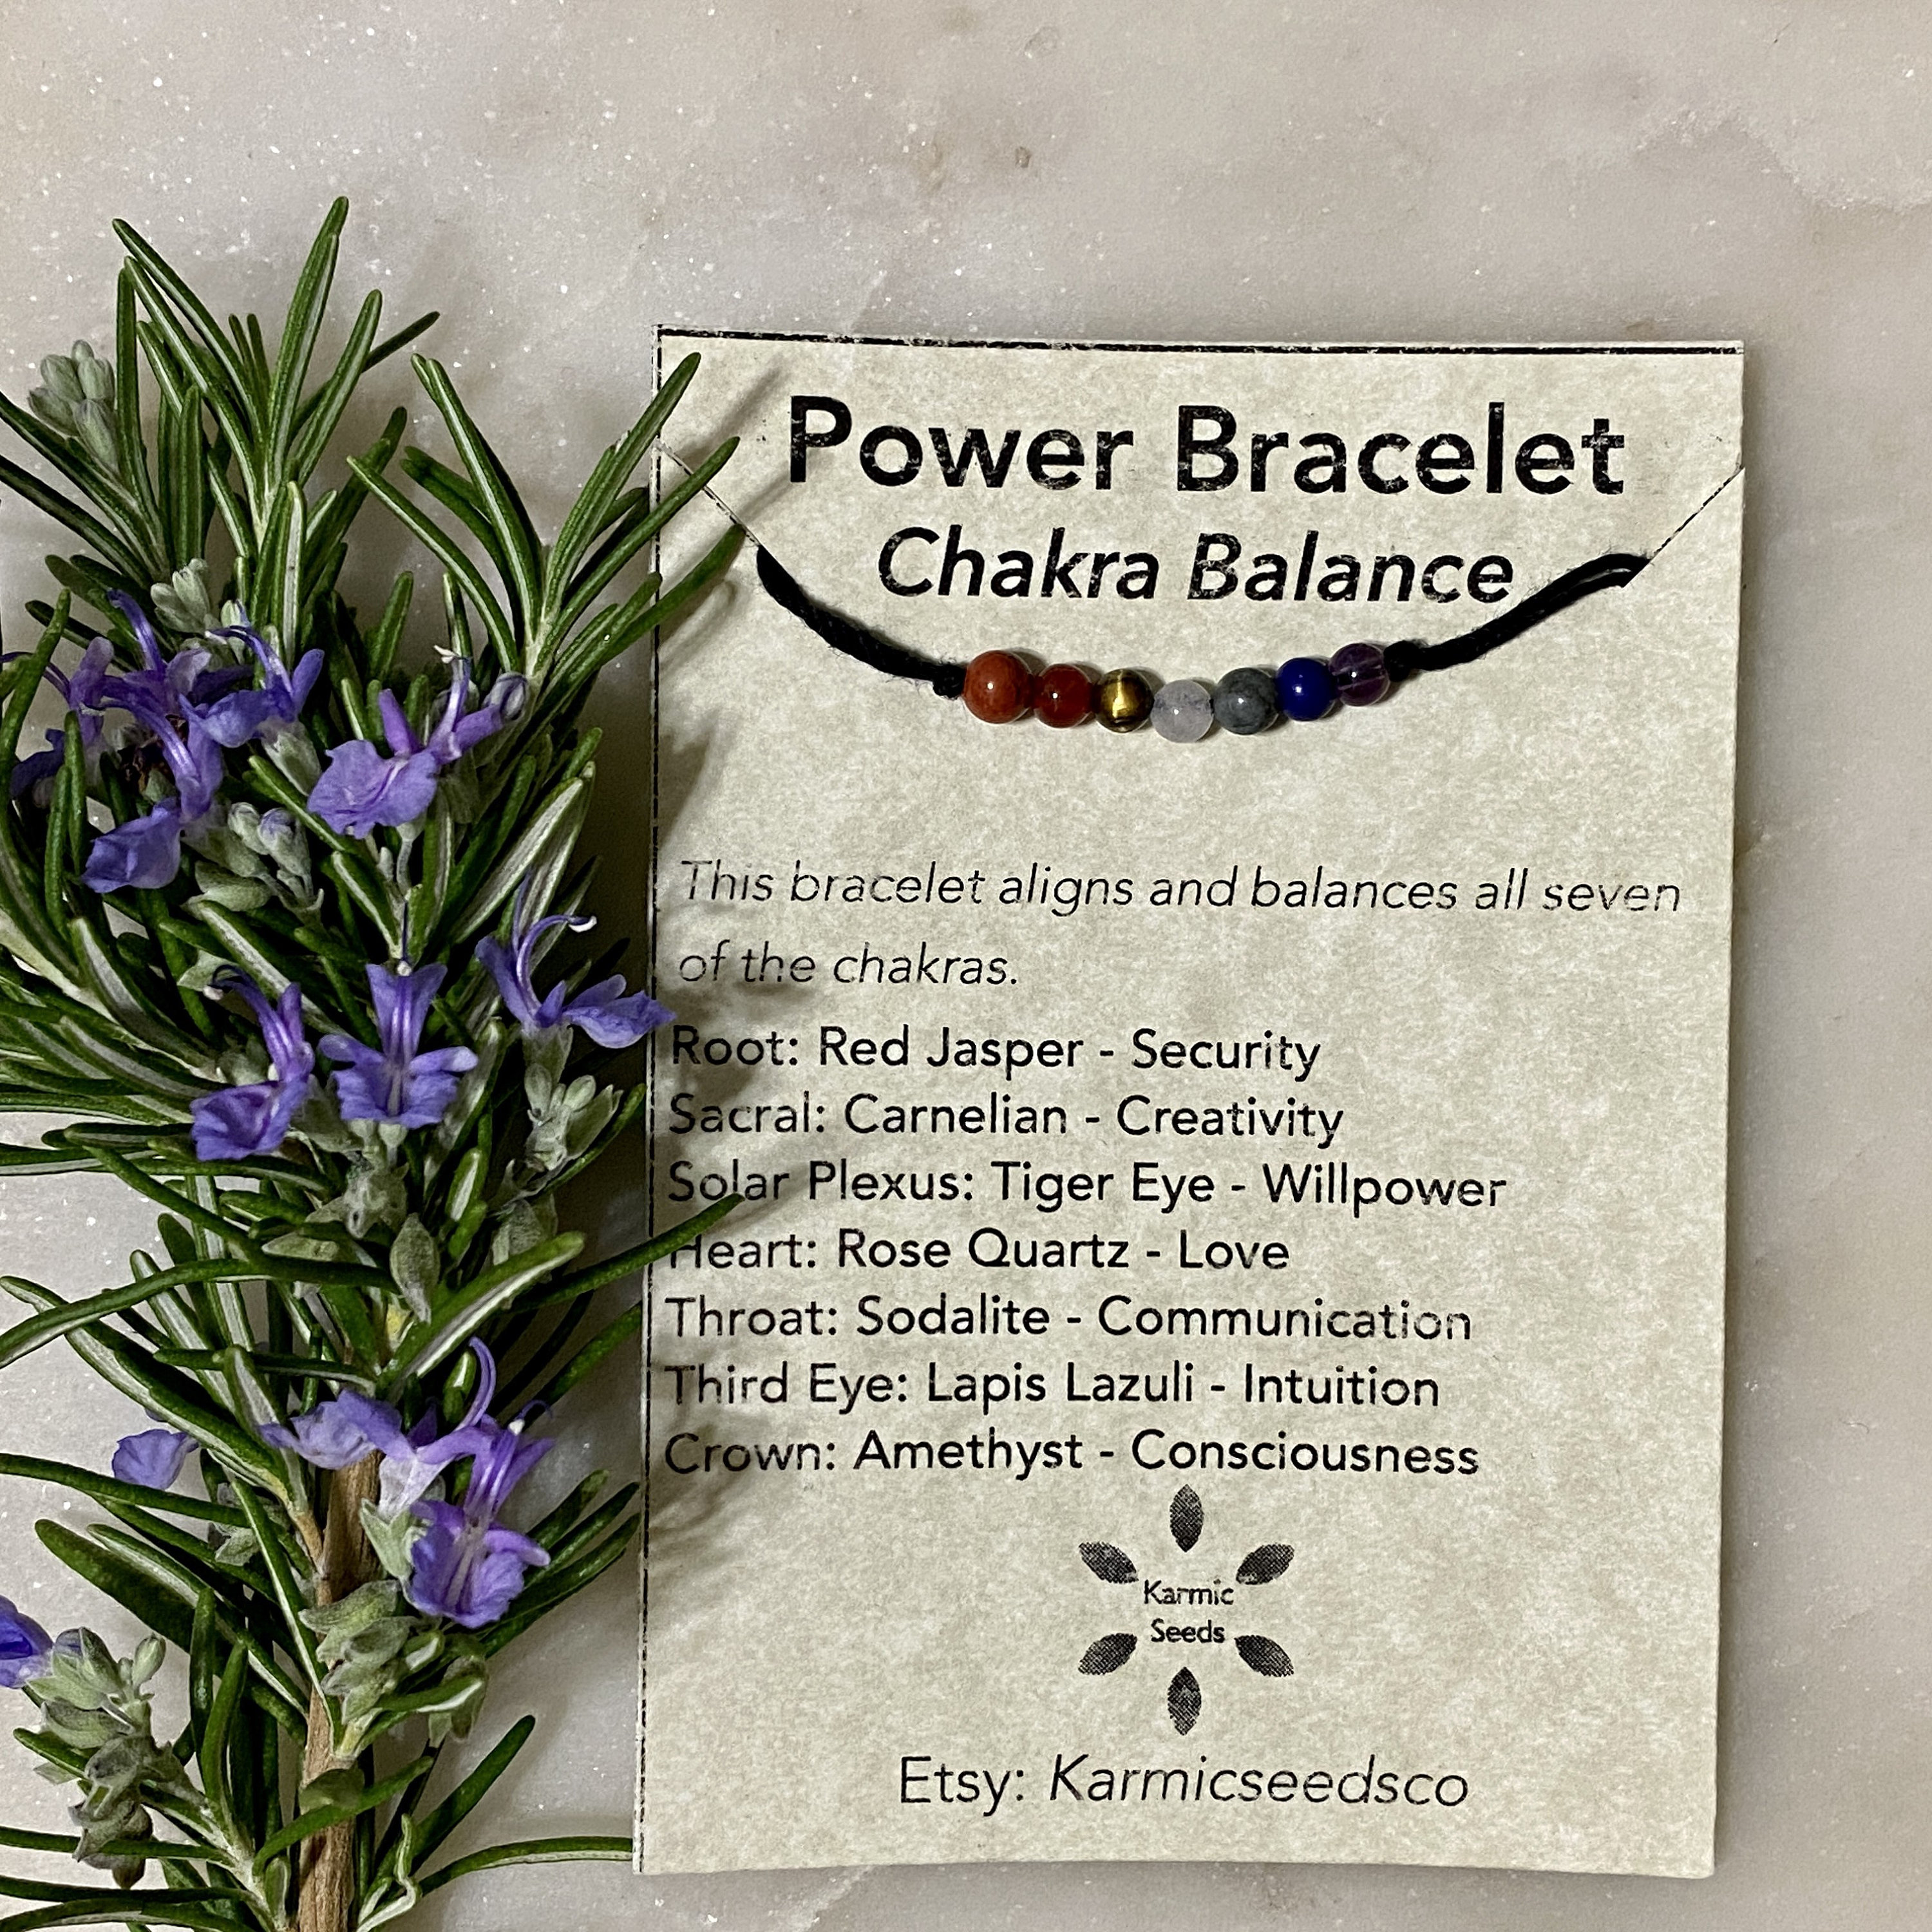 Spyronix Real Treasure Harmony and Balance 7 Chakra Stone Bracelet   Restore Energy and Promote Wellbeing